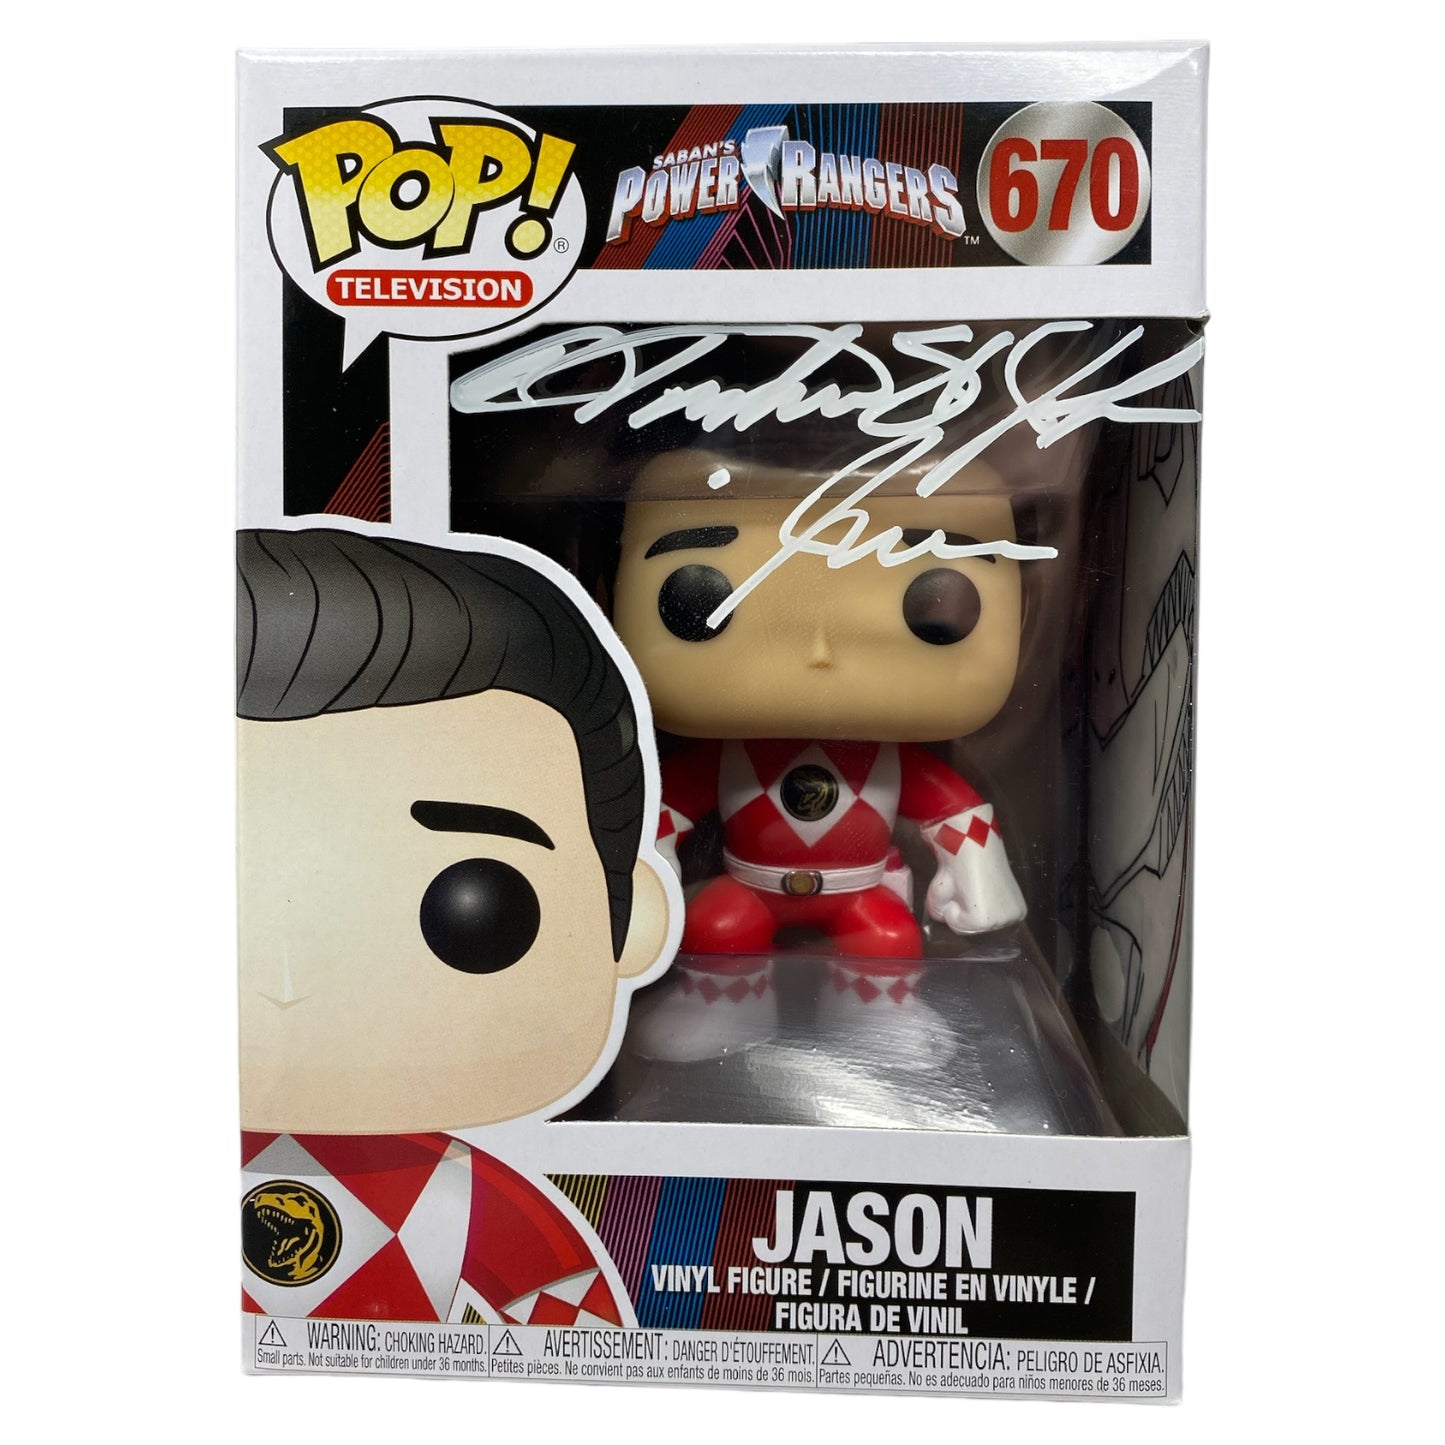 Sold - TV - Power Rangers - Austin St. John Autographed Jason 670, TCC X DNA Custom